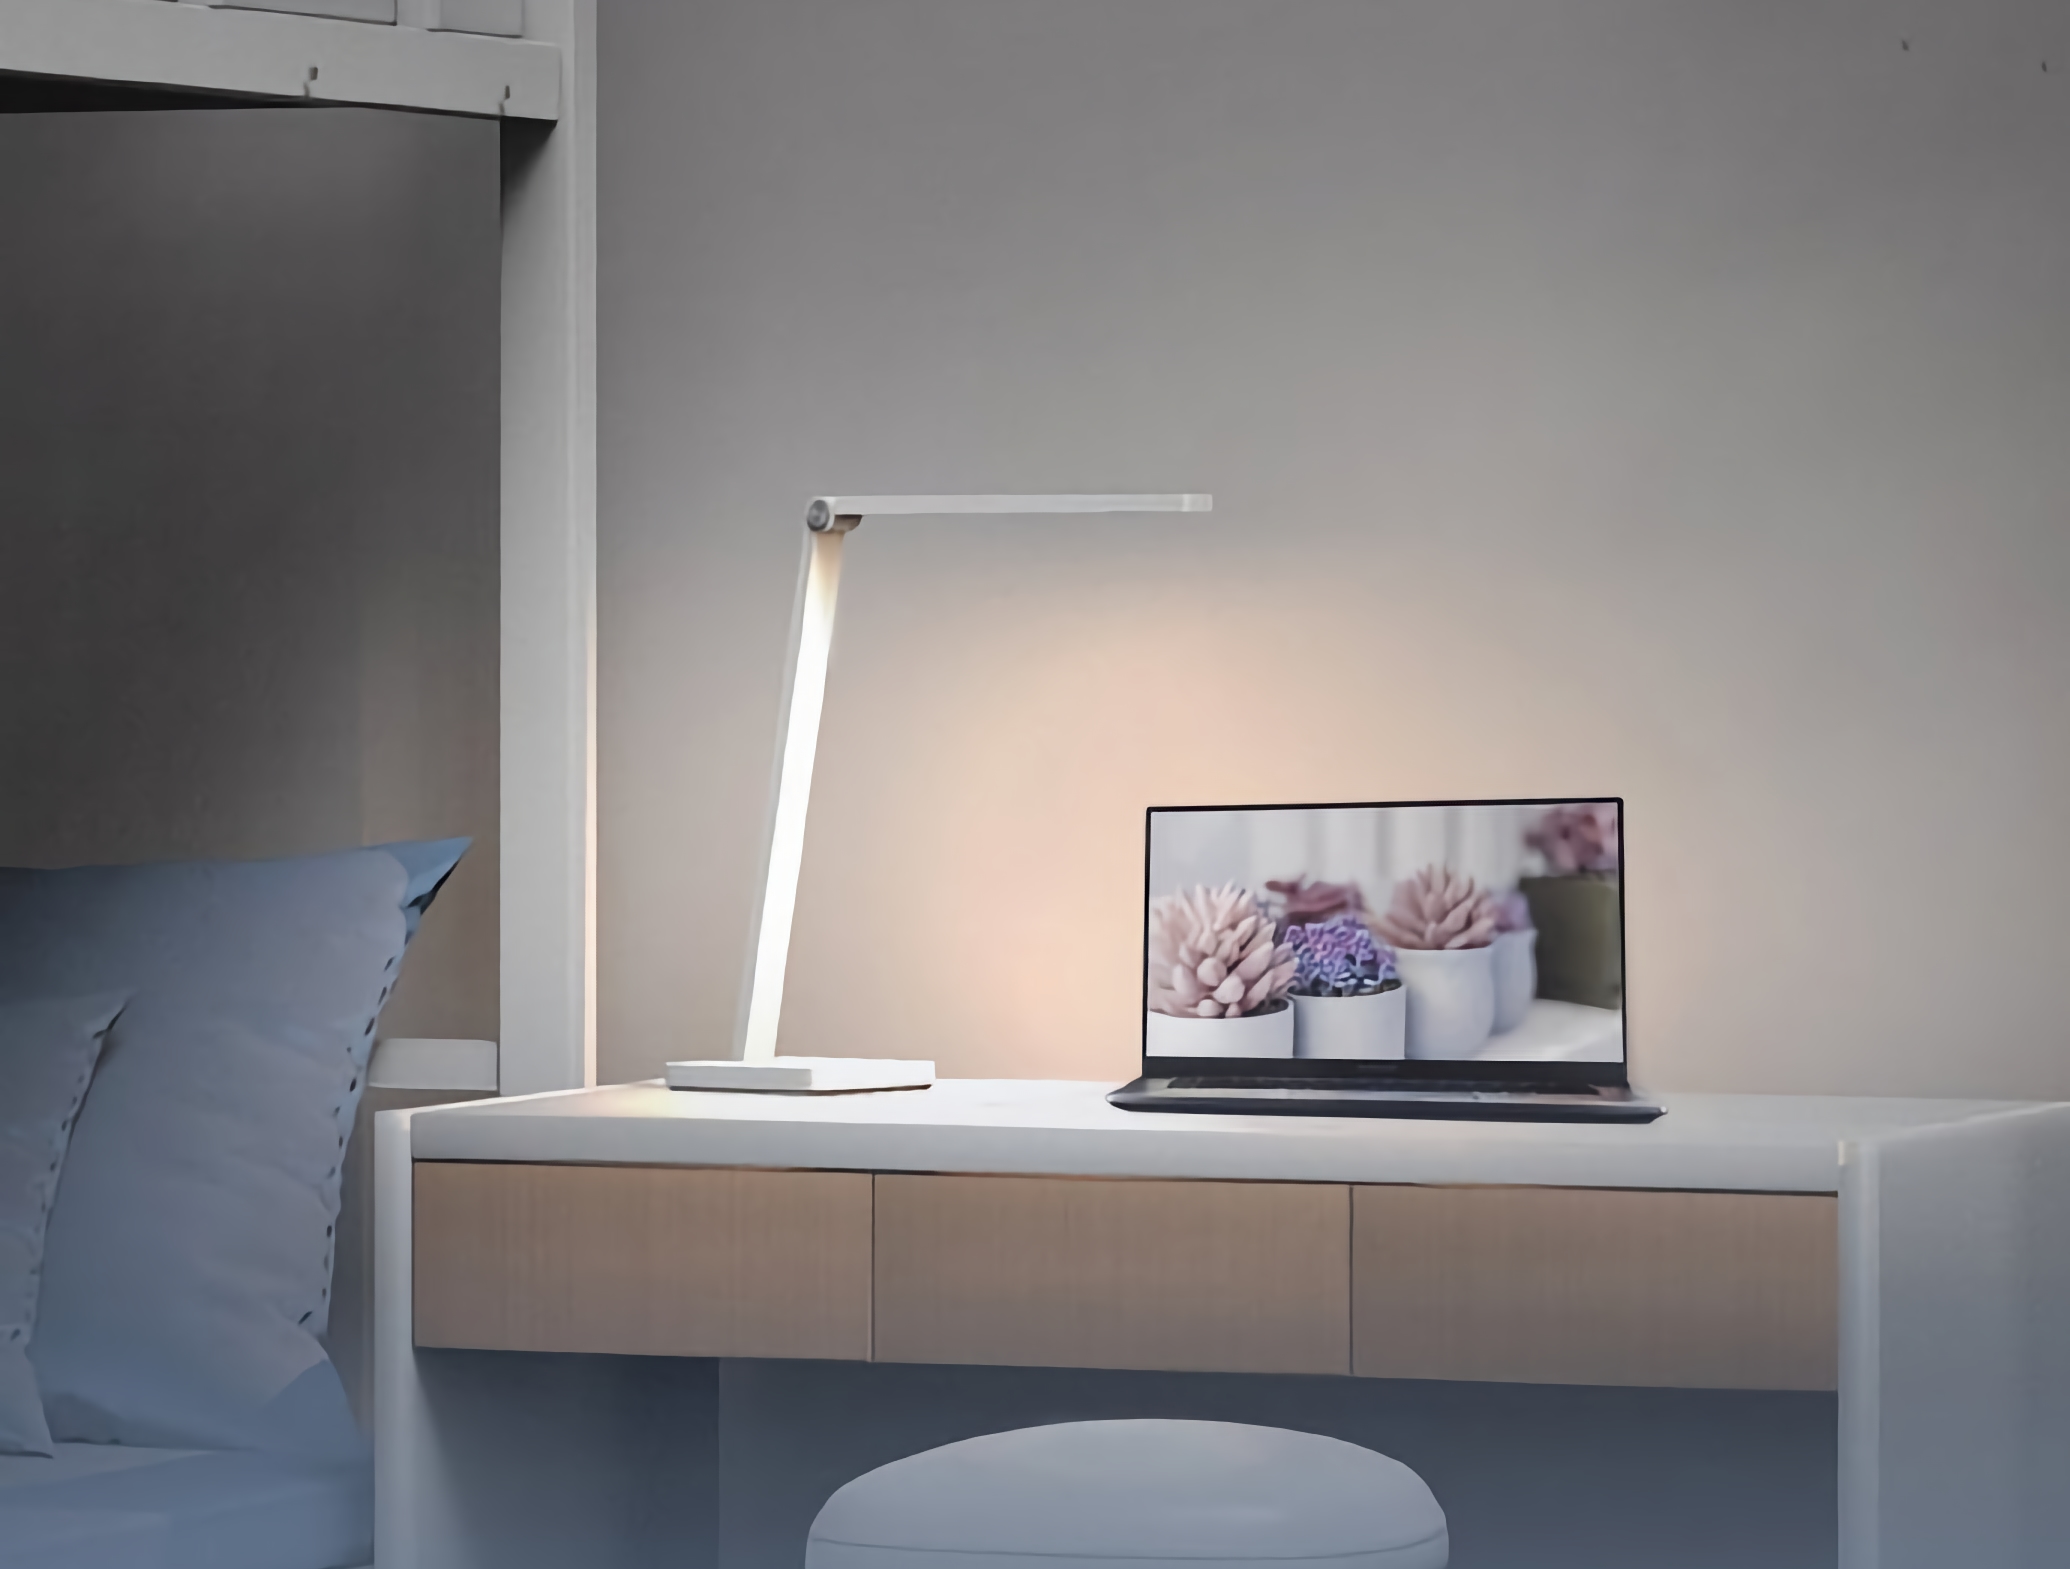 Xiaomi unveiled MiJia Smart Desk Lamp Lite for $15